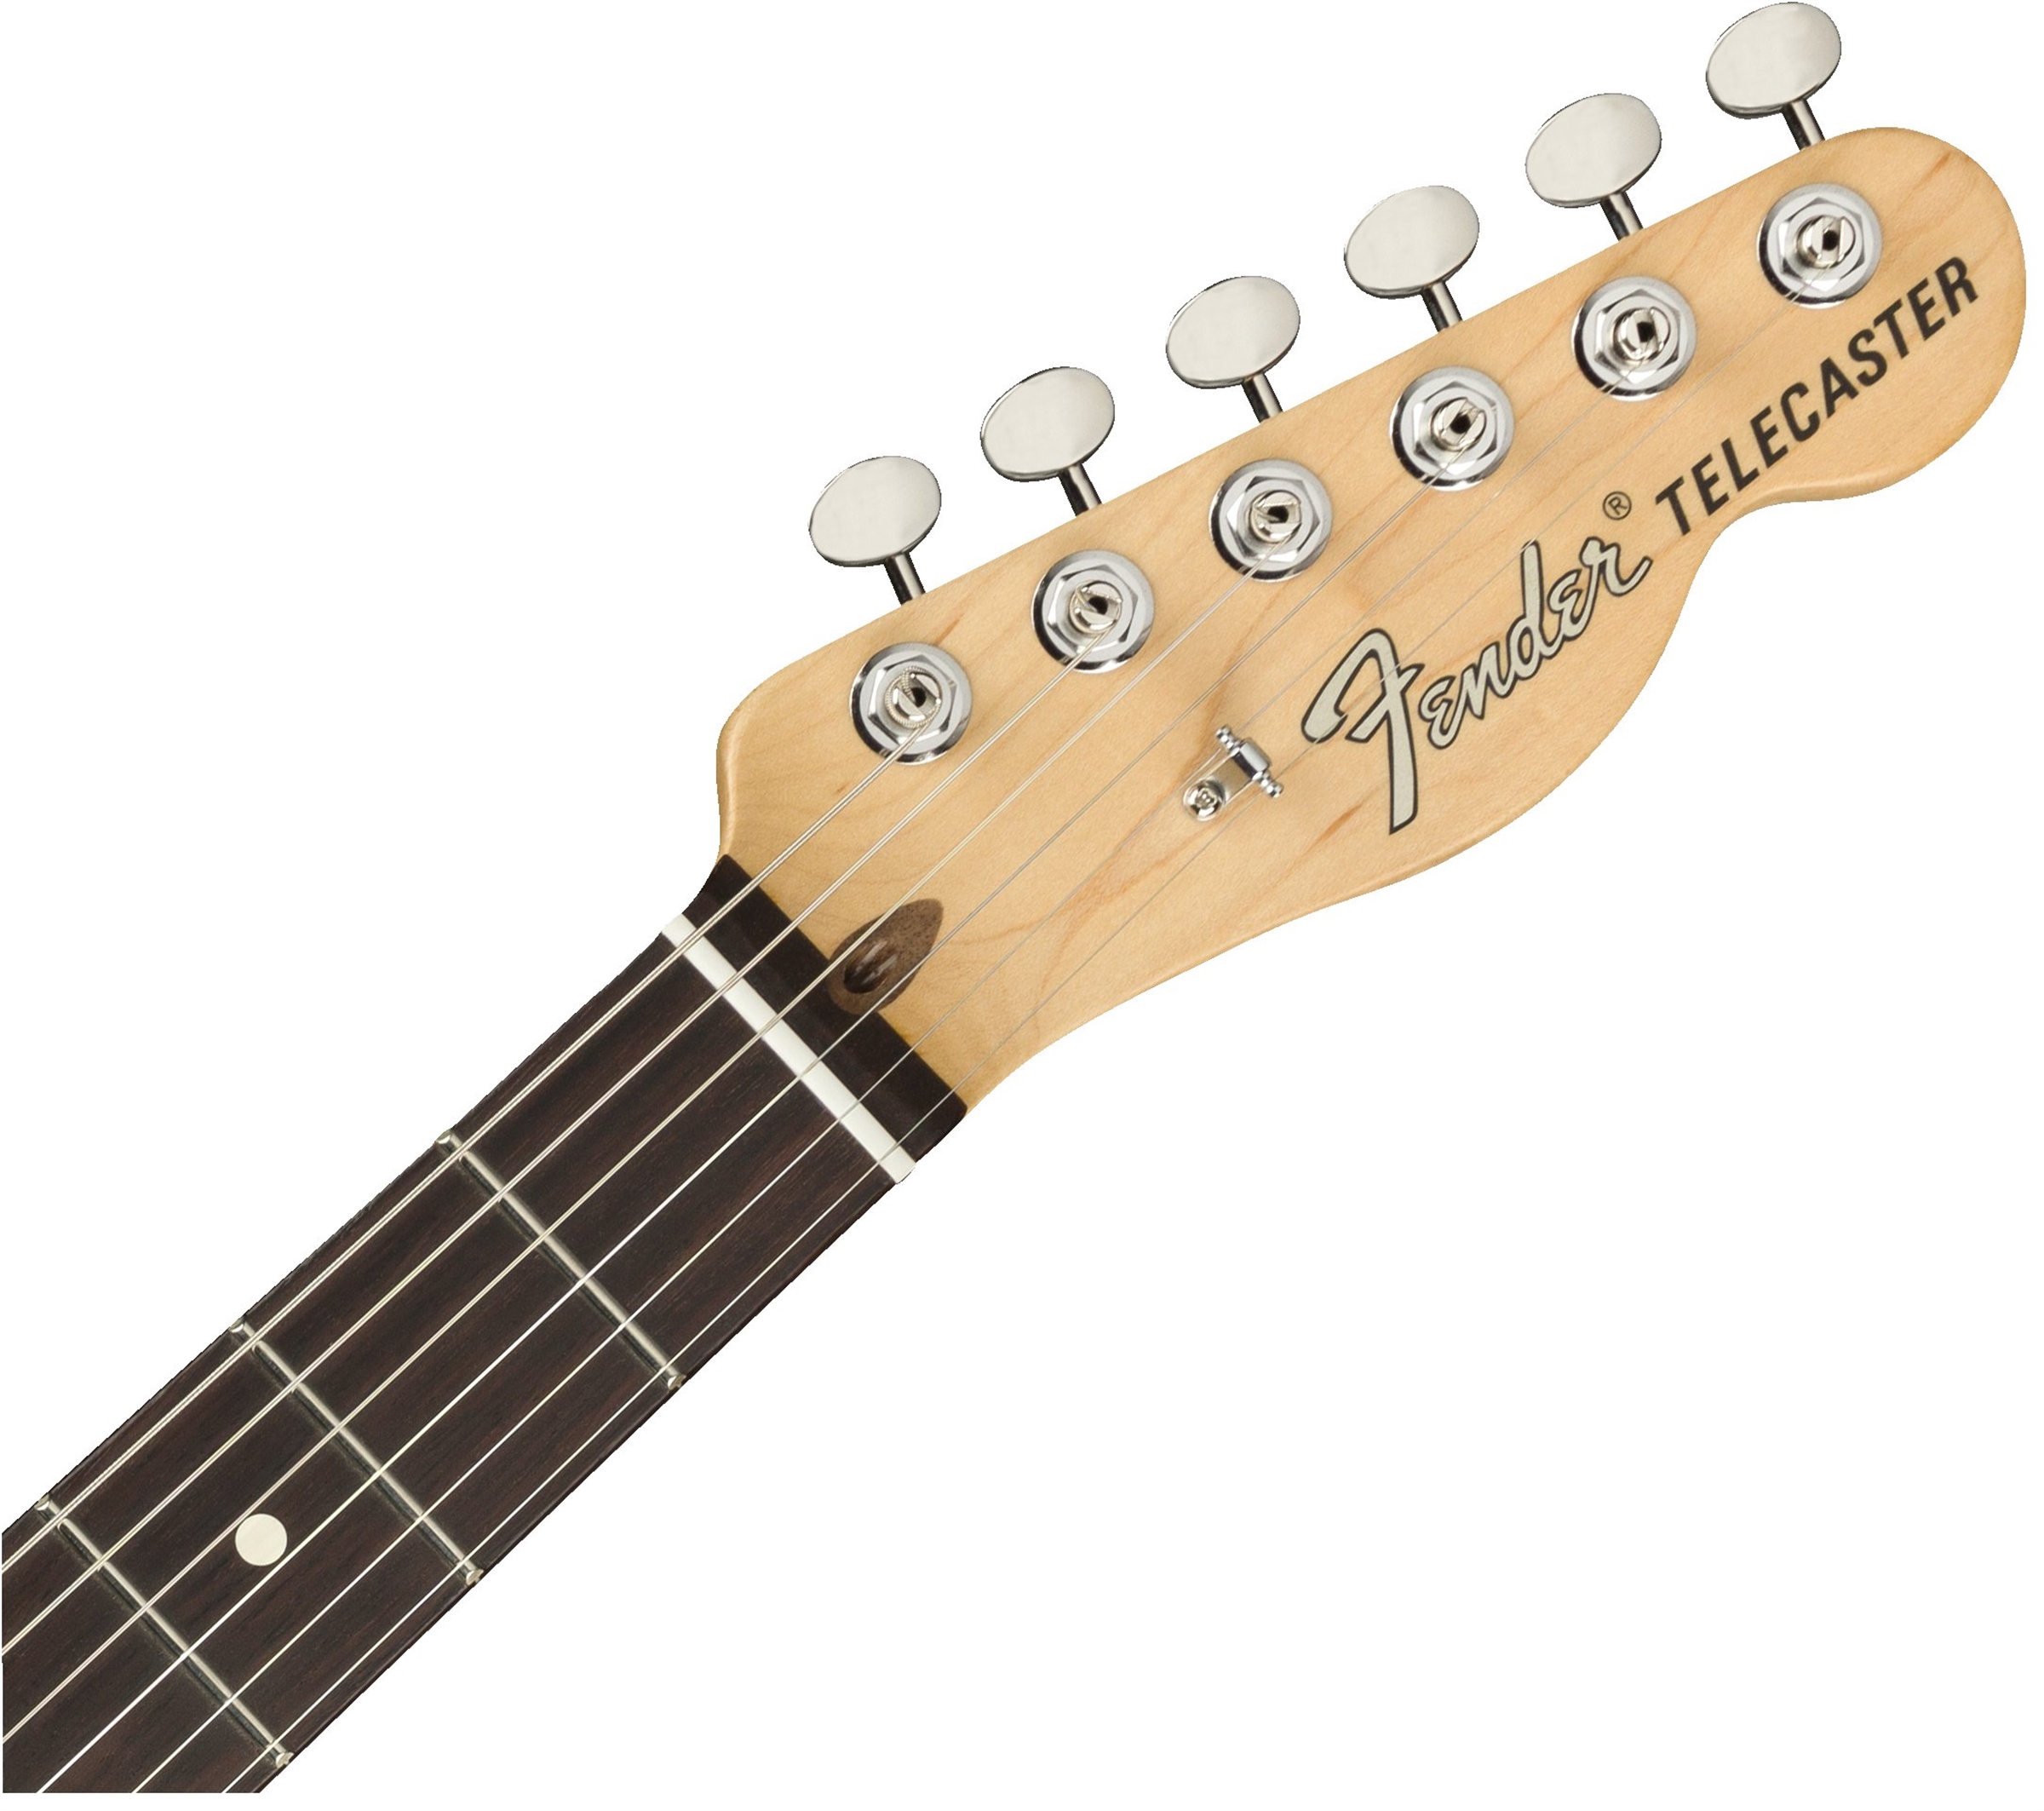 Fender Tele American Performer Usa Rw - Satin Sonic Blue - Guitarra eléctrica con forma de tel - Variation 4